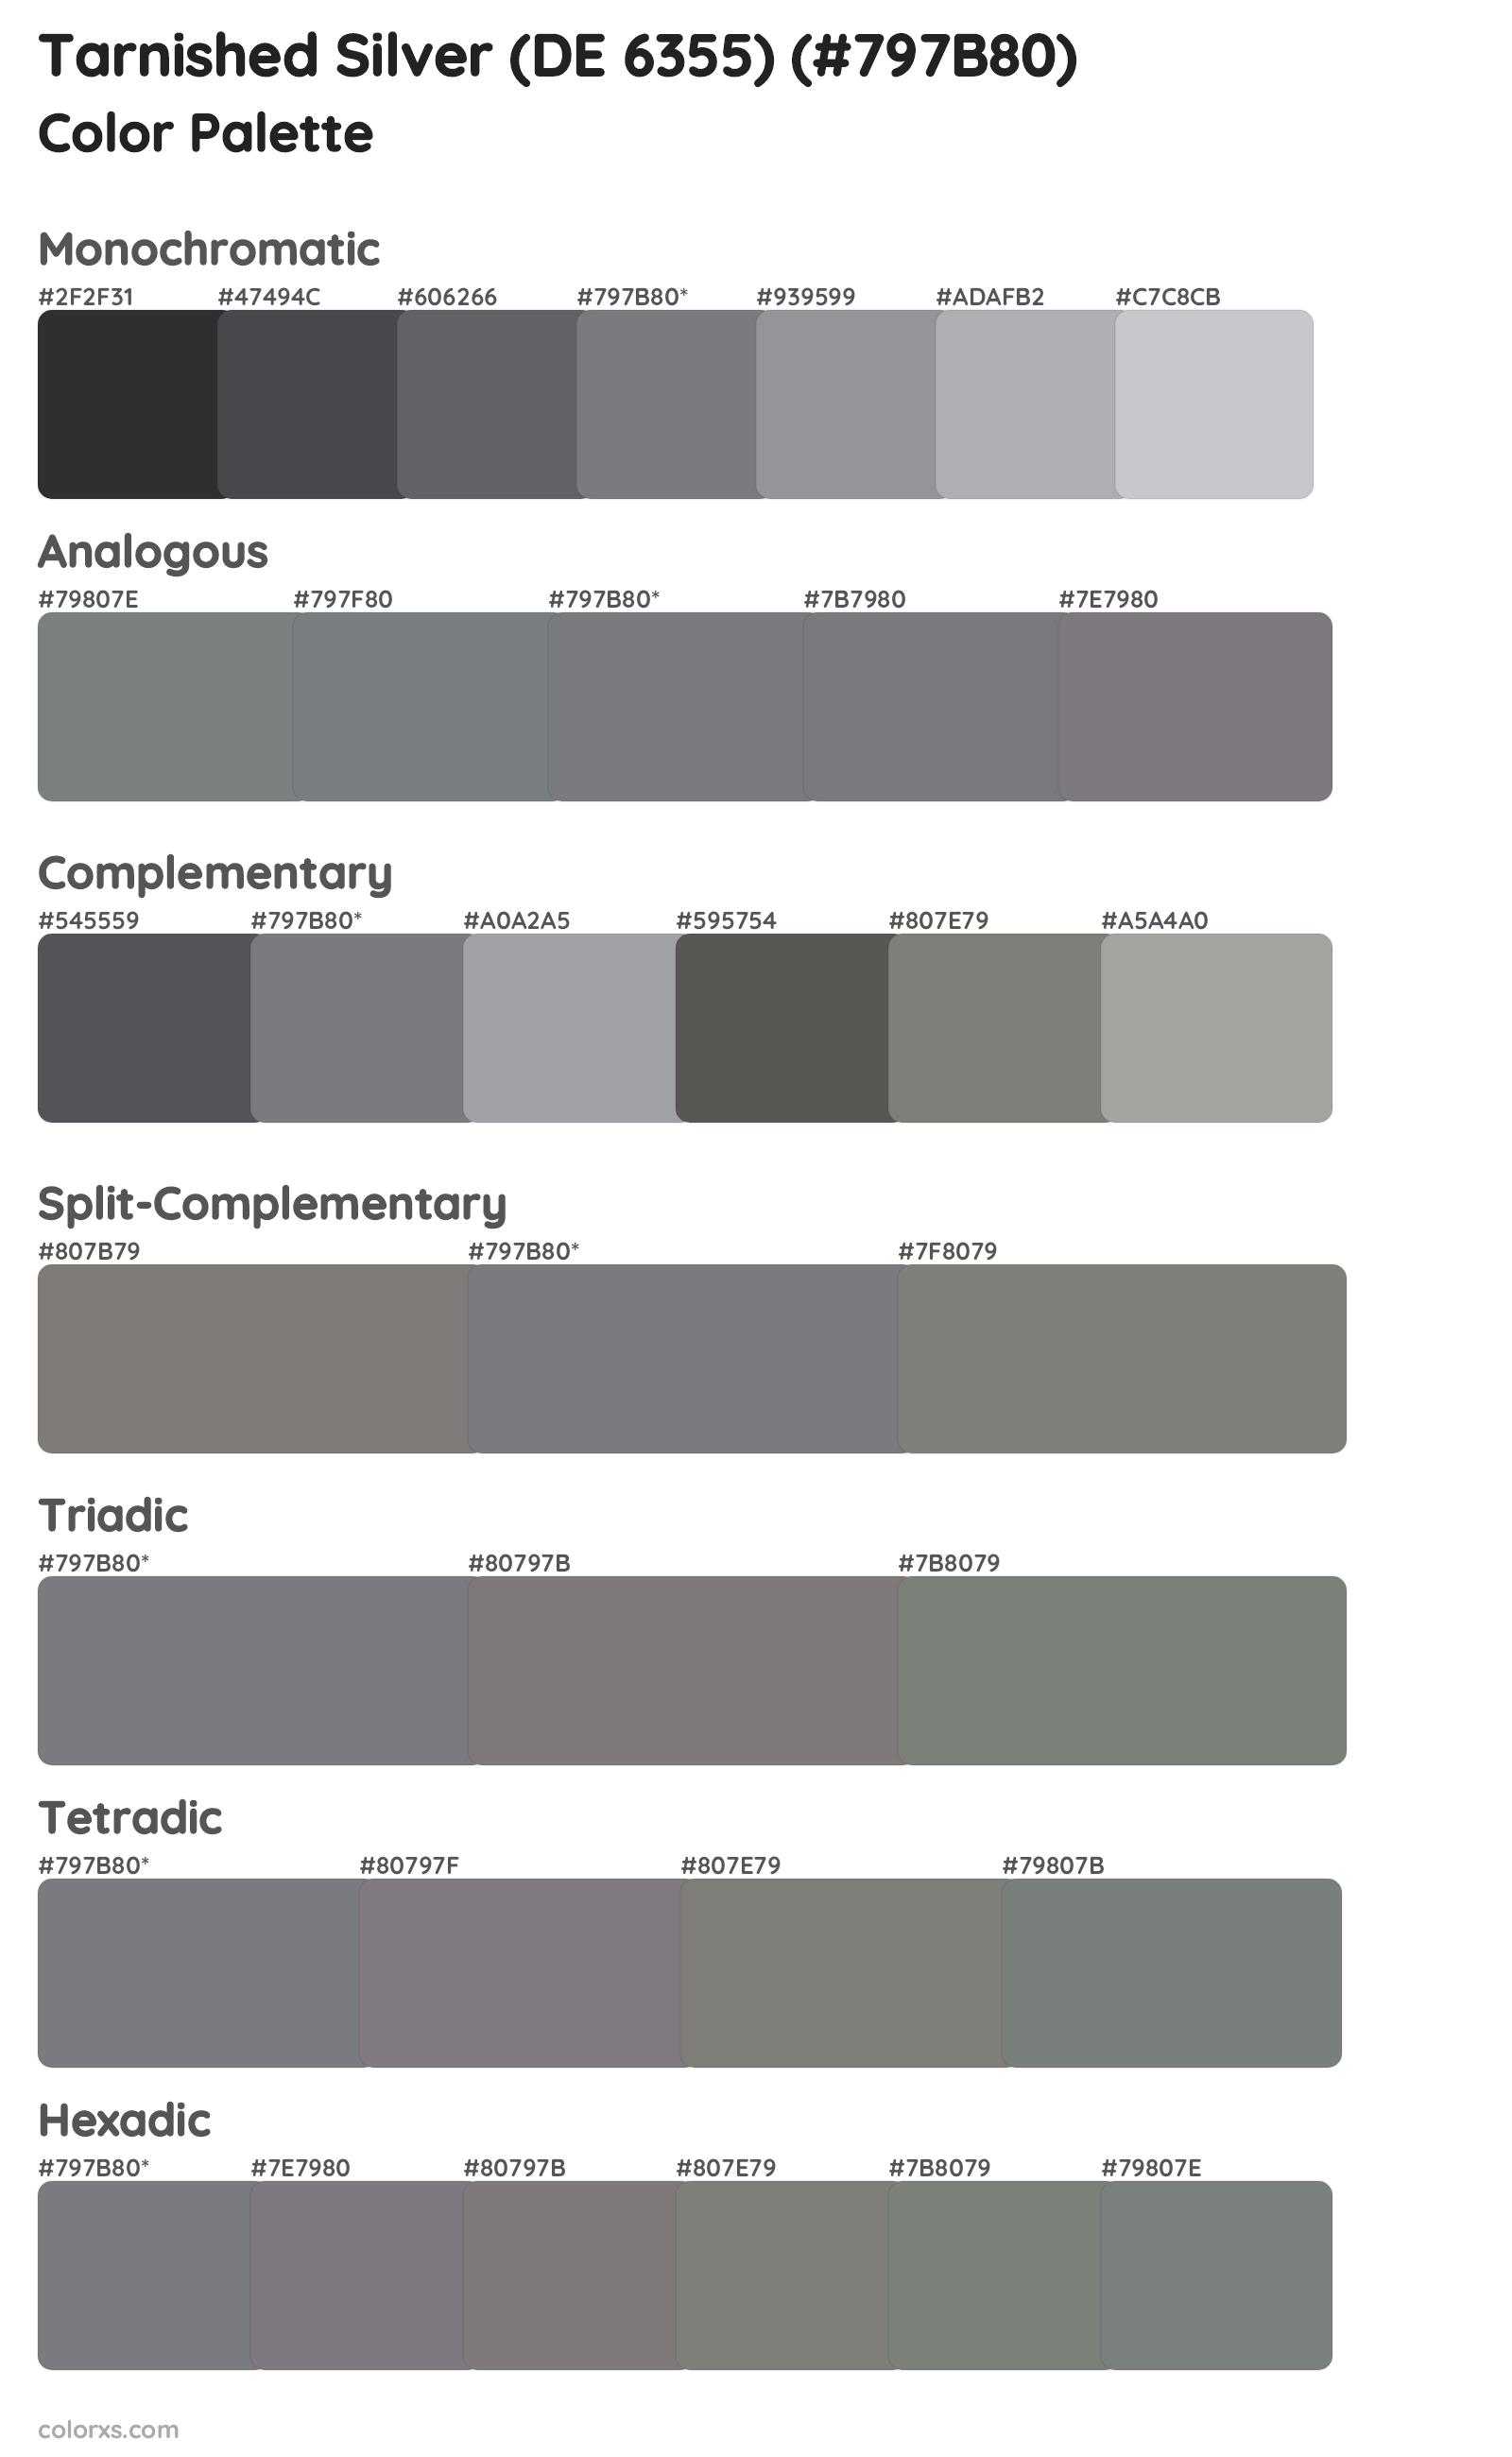 Tarnished Silver (DE 6355) Color Scheme Palettes